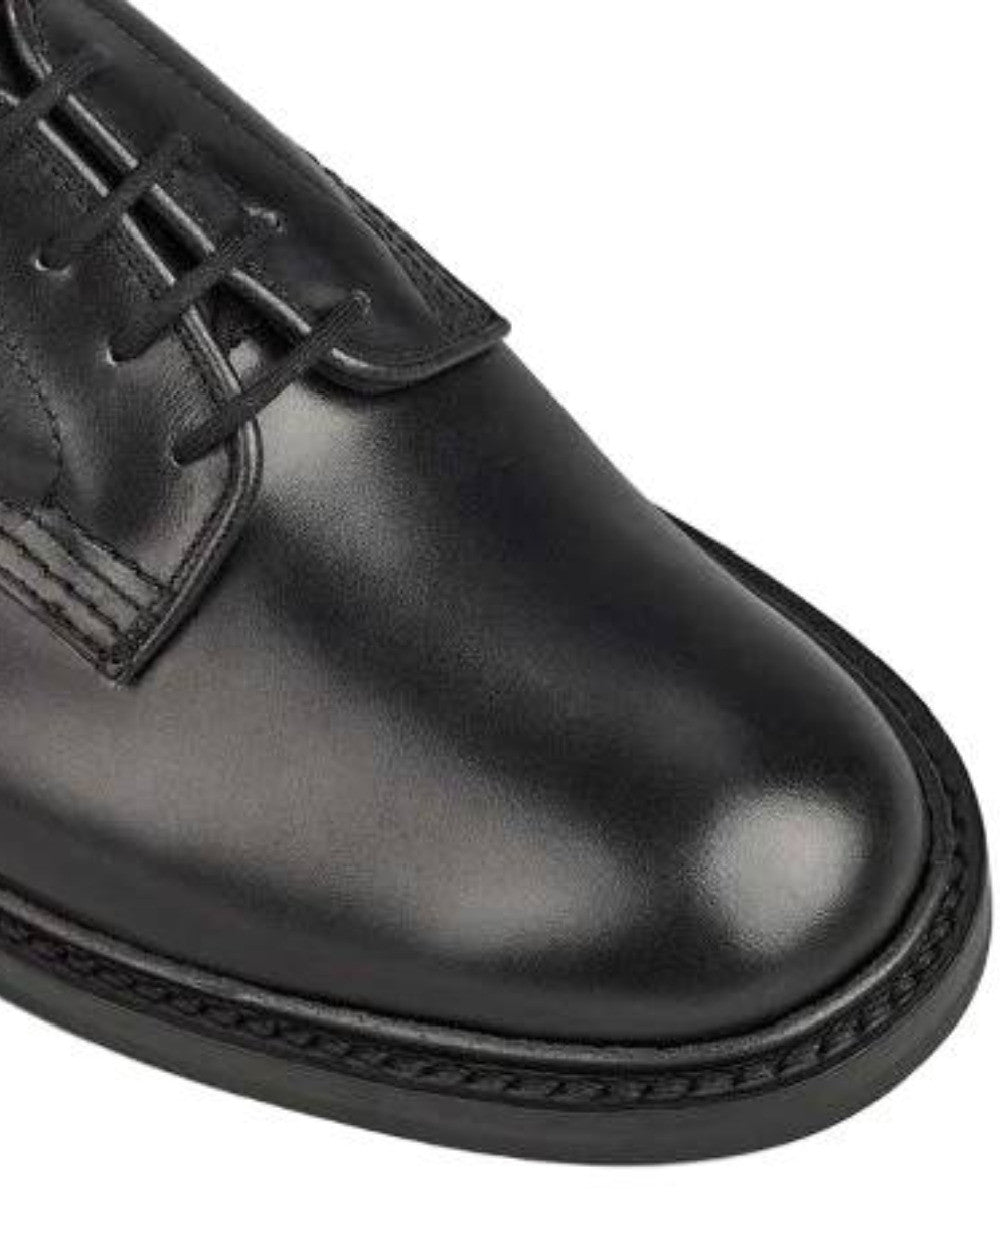 Black Calf Coloured Trickers Woodstock Plain Derby Shoe Dainite Sole On A White Background 